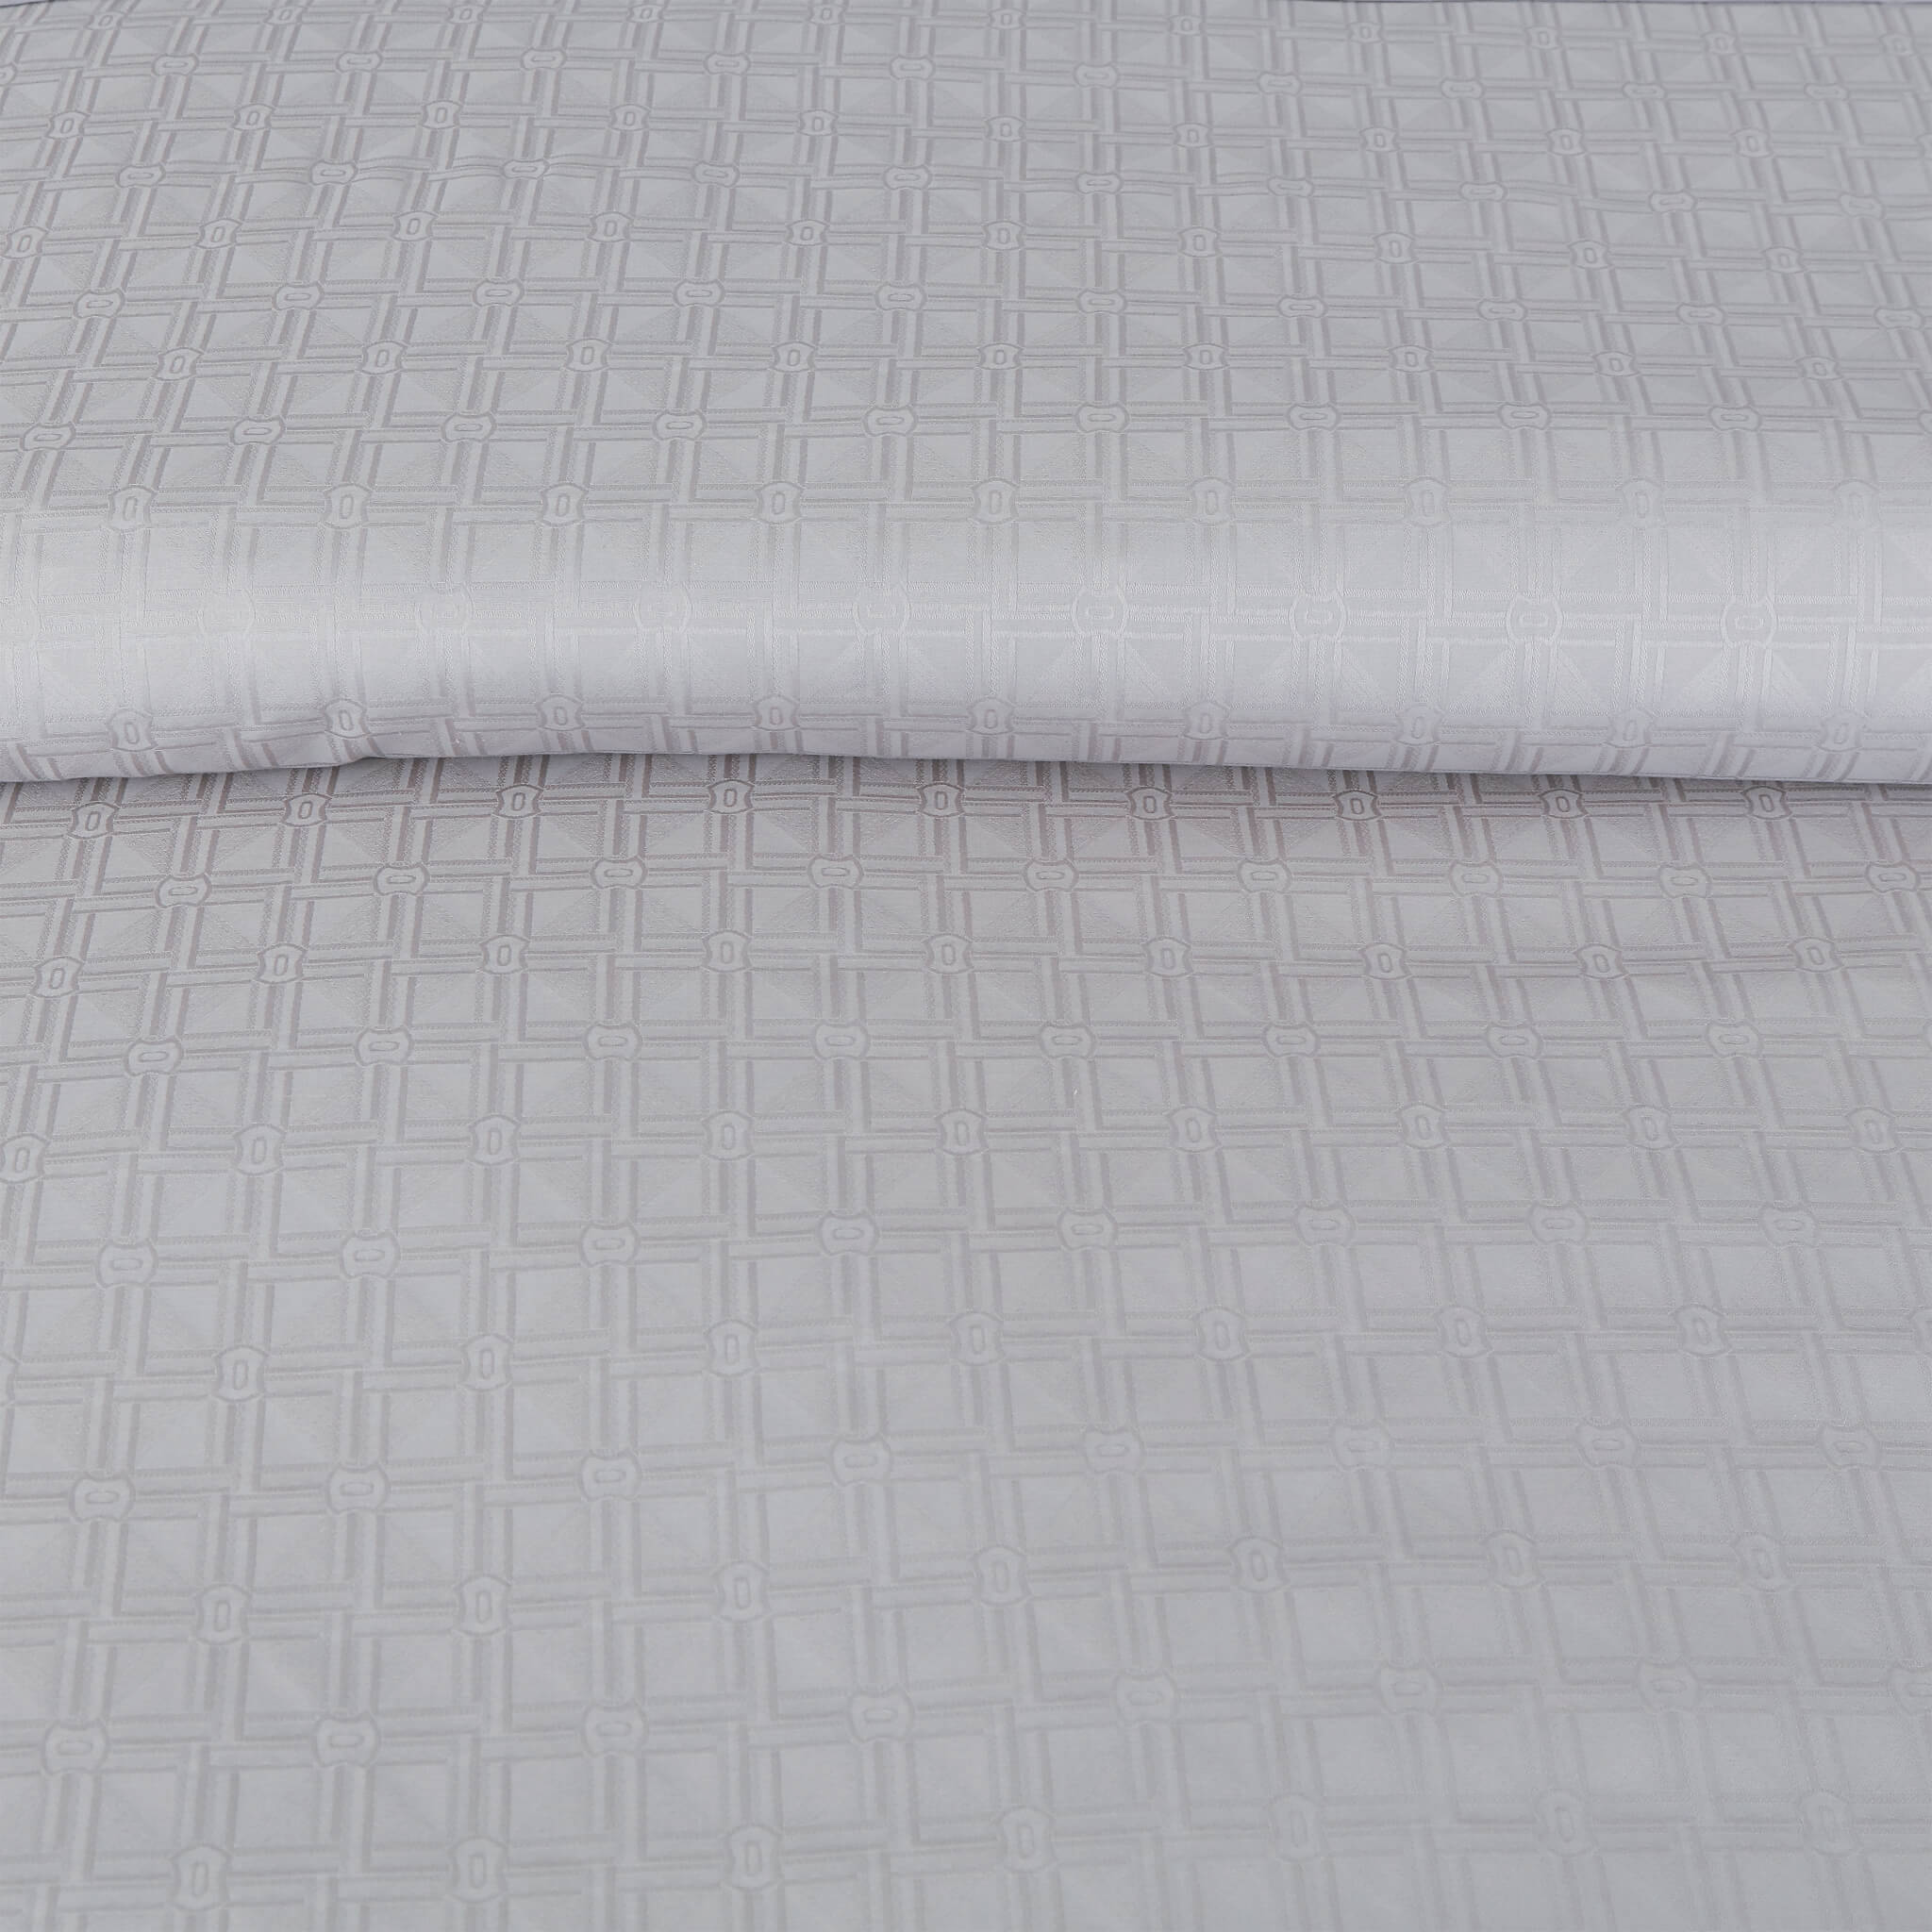 Malako Coloured Jacquard Cloud Grey Abstract 500 TC 100% Cotton Double Bed Duvet Cover Set - MALAKO